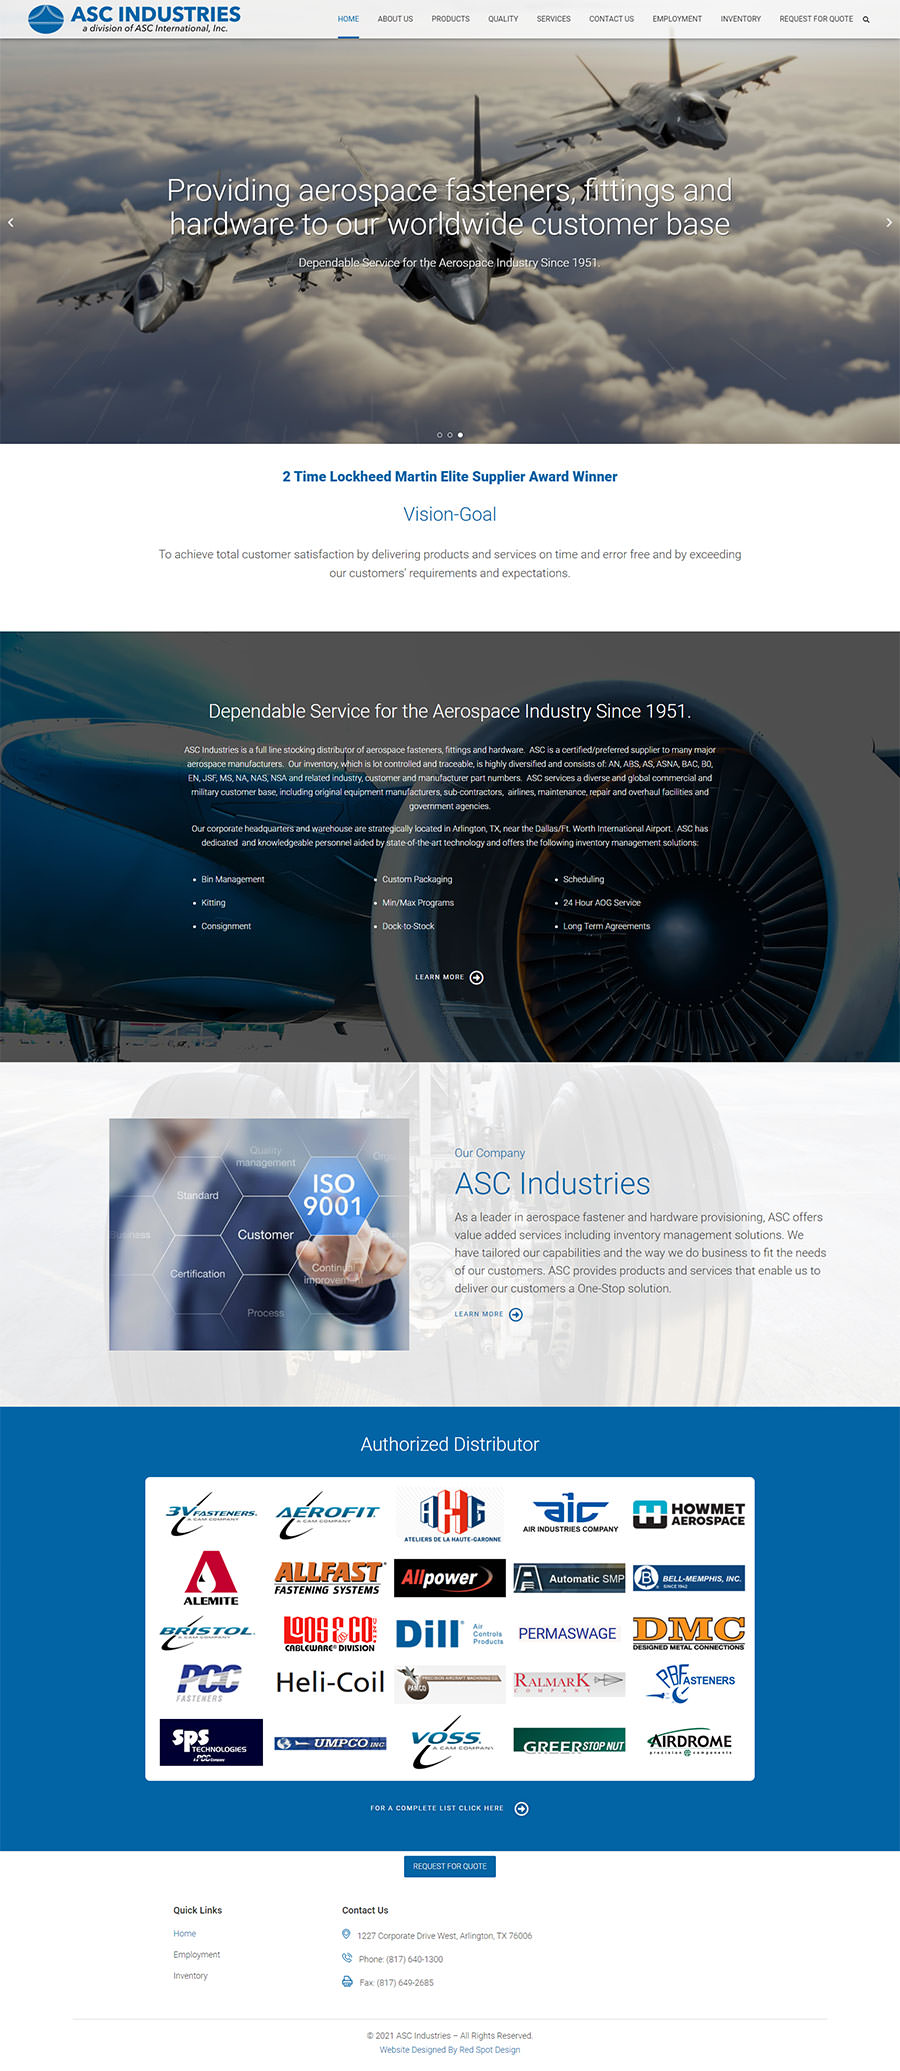 website re-designed for asc industries